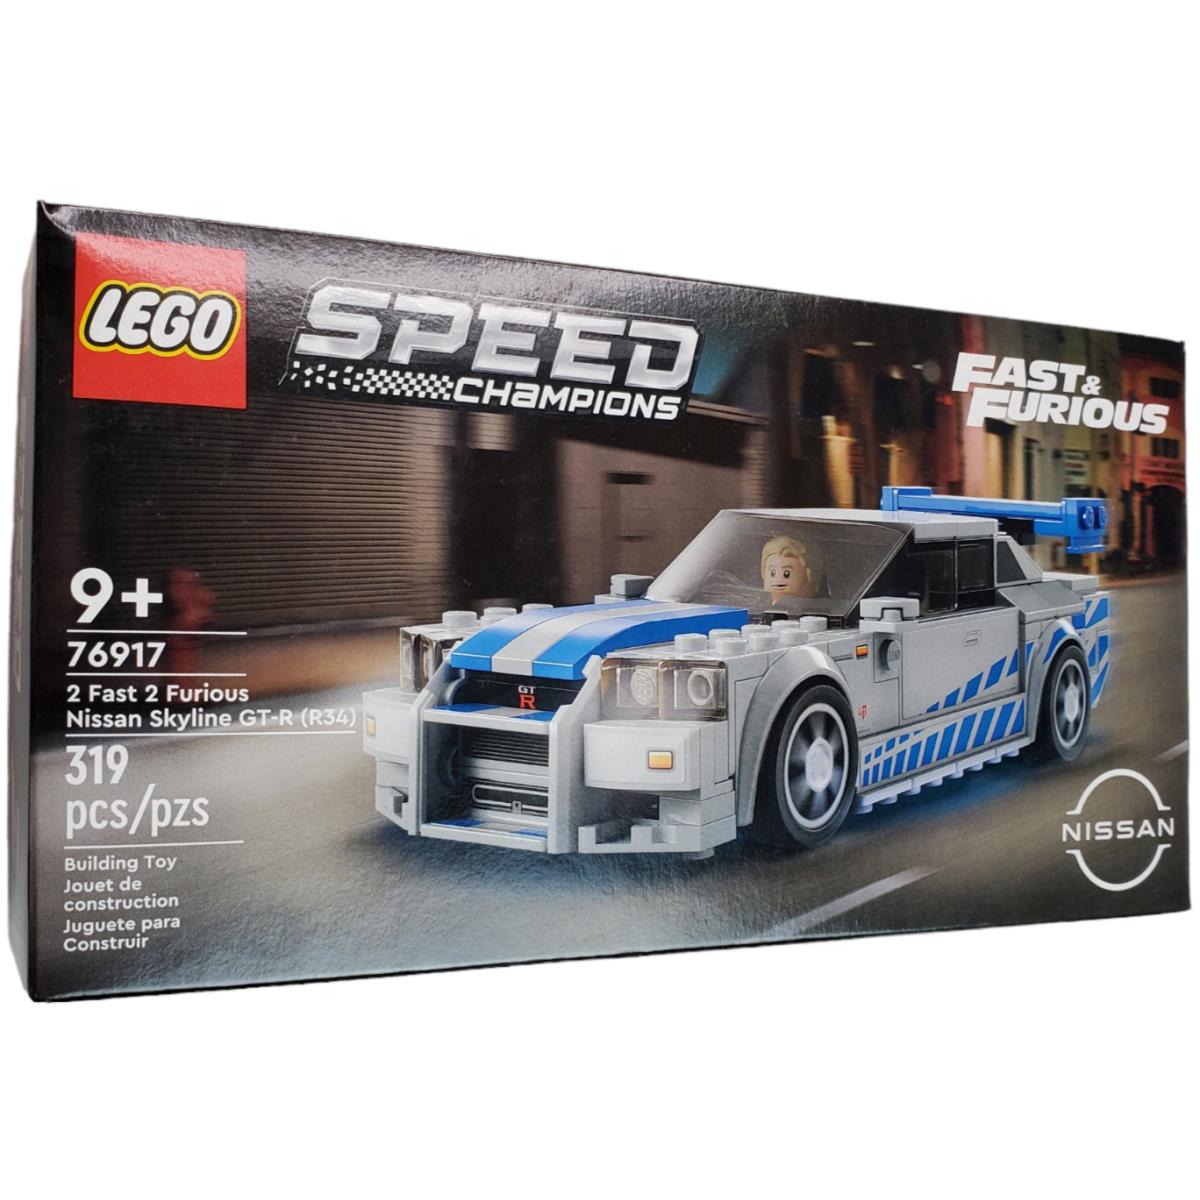 Lego 76917 Speed Champions 2 Fast 2 Furious Nissan Skyline GT R R34 319 Pcs